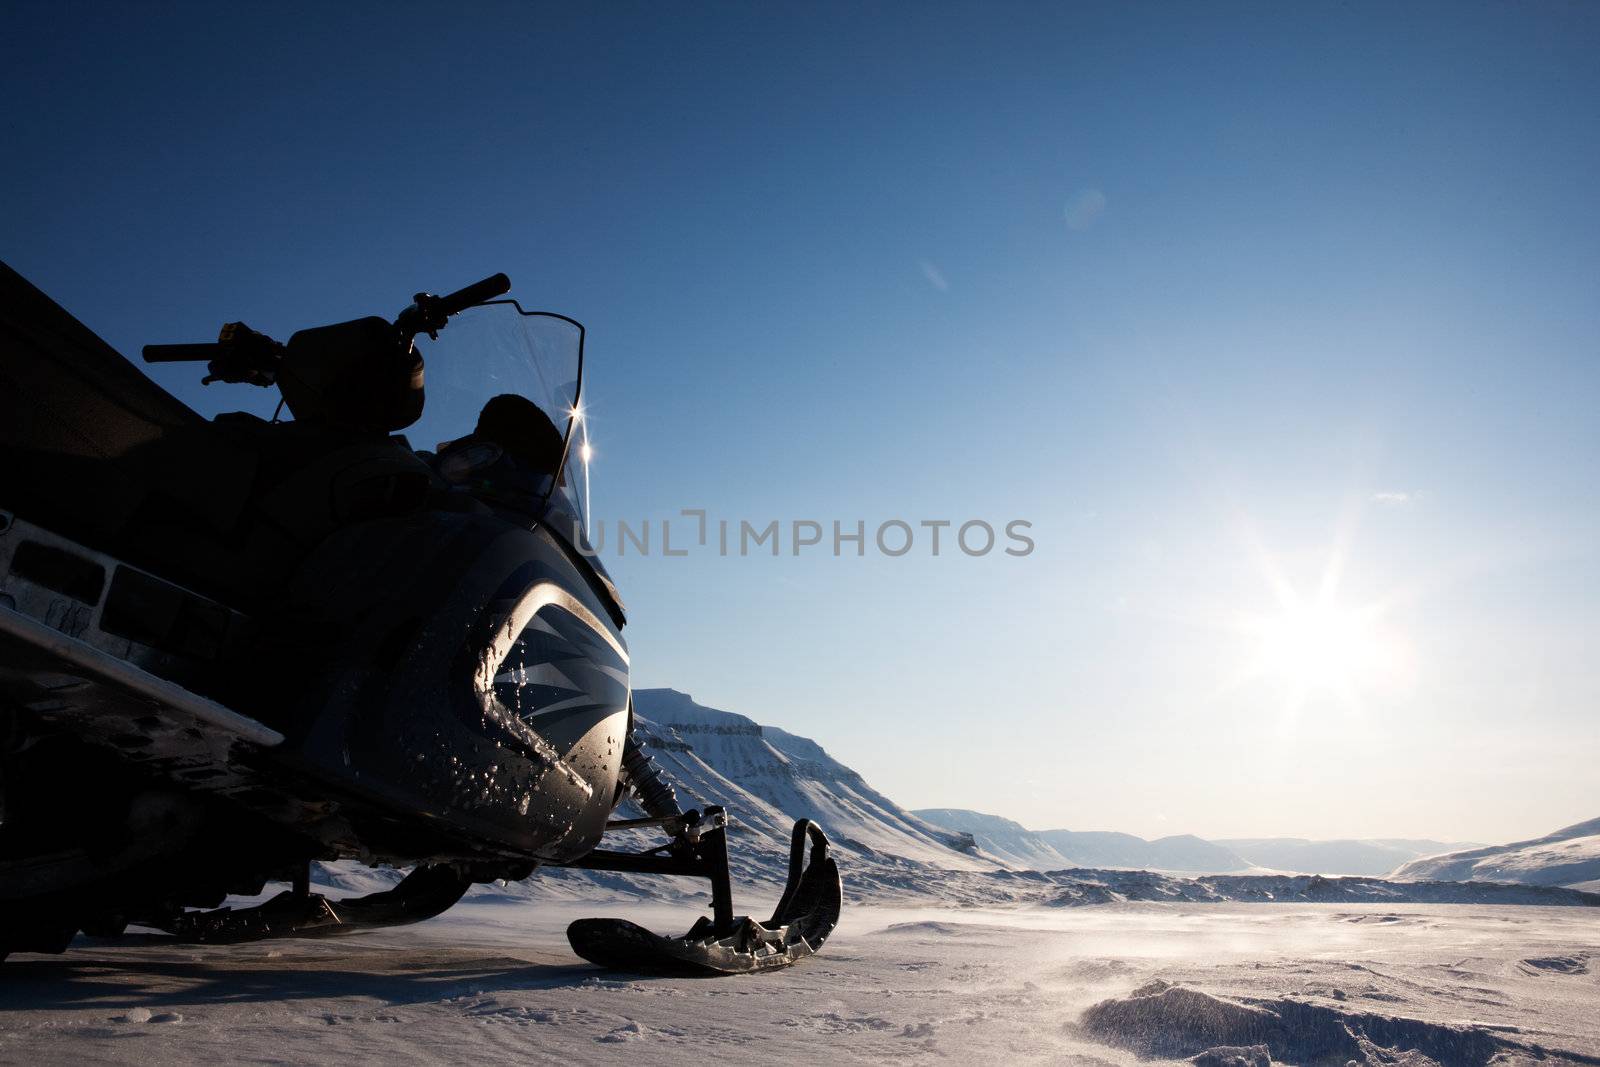 A snowmobile detail on a barren winter landscape